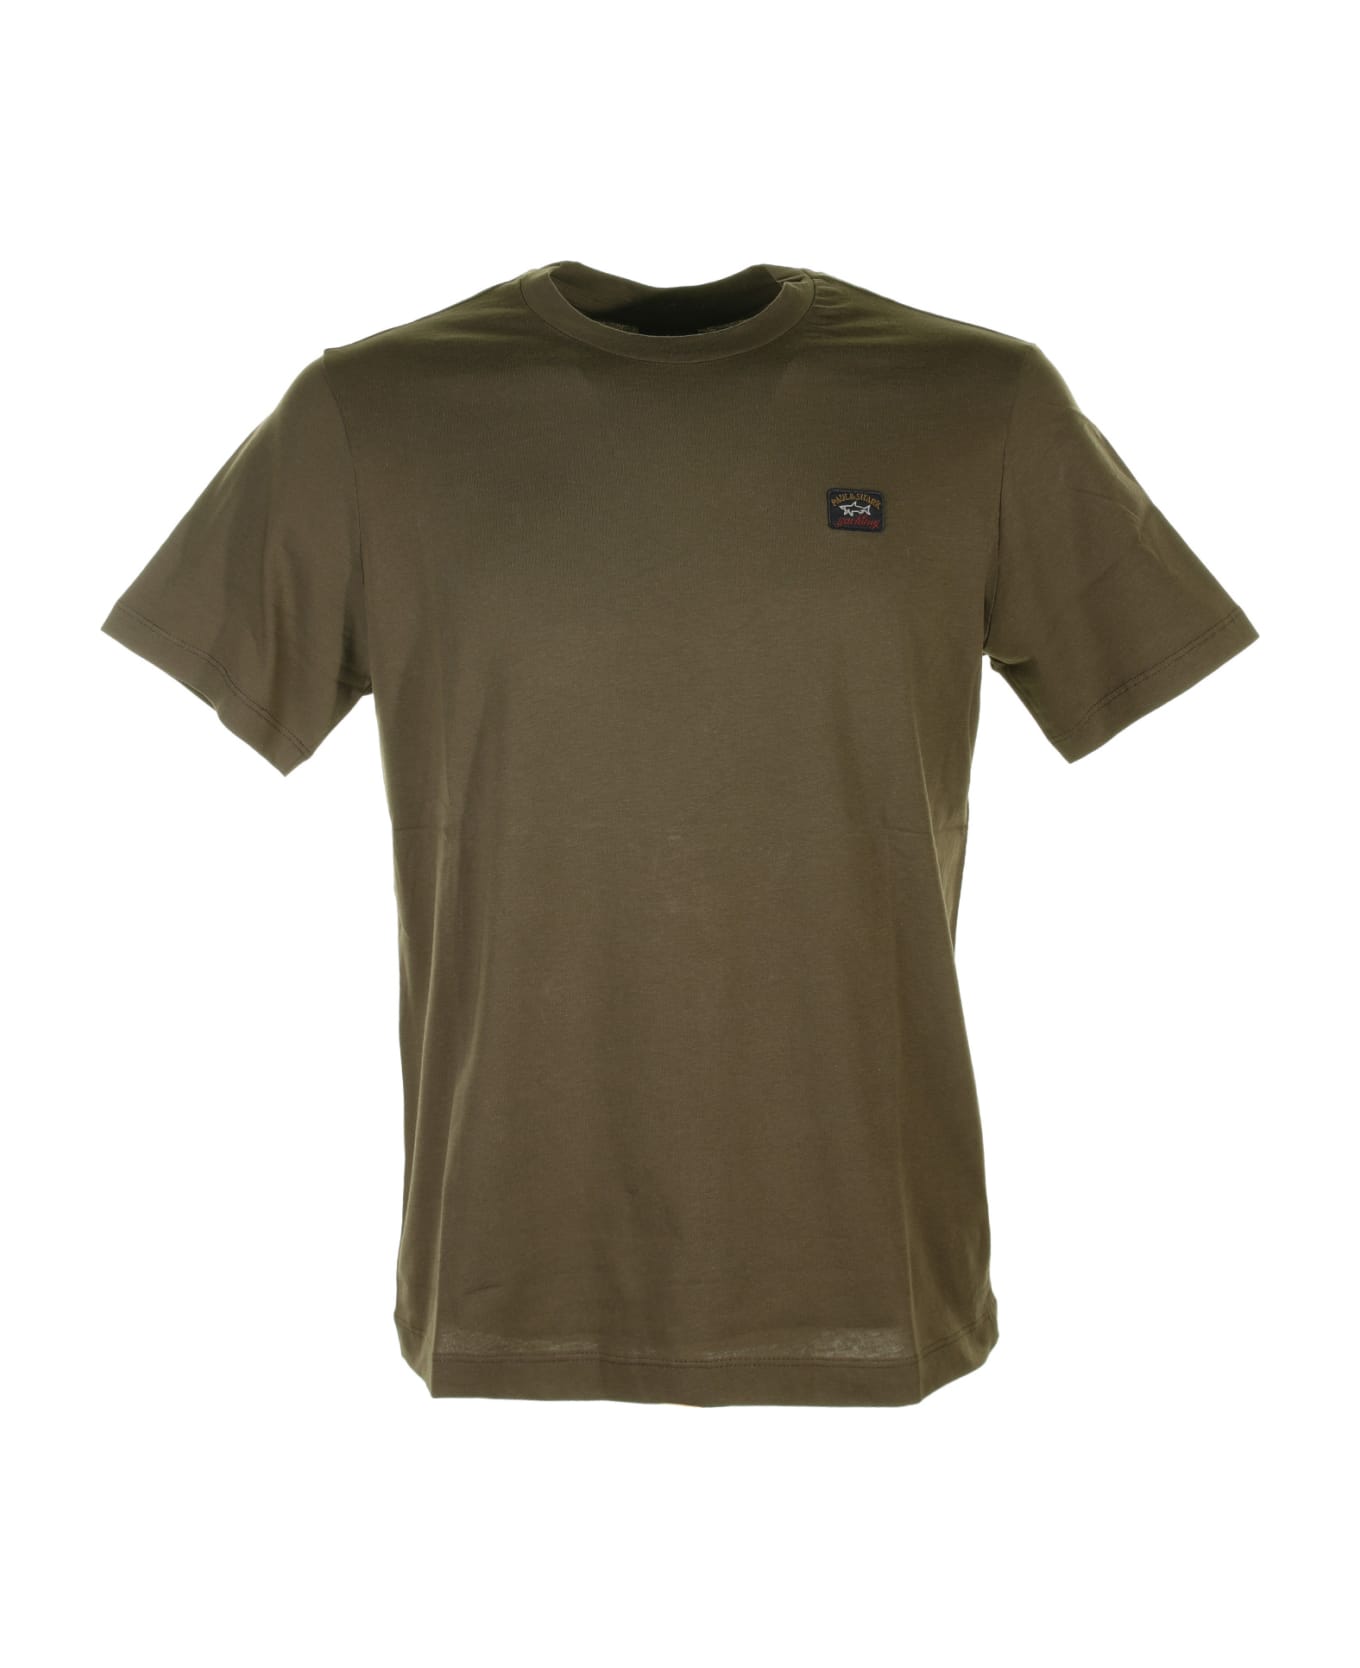 Paul&Shark Military Green T-shirt With Logo - MILITARE シャツ